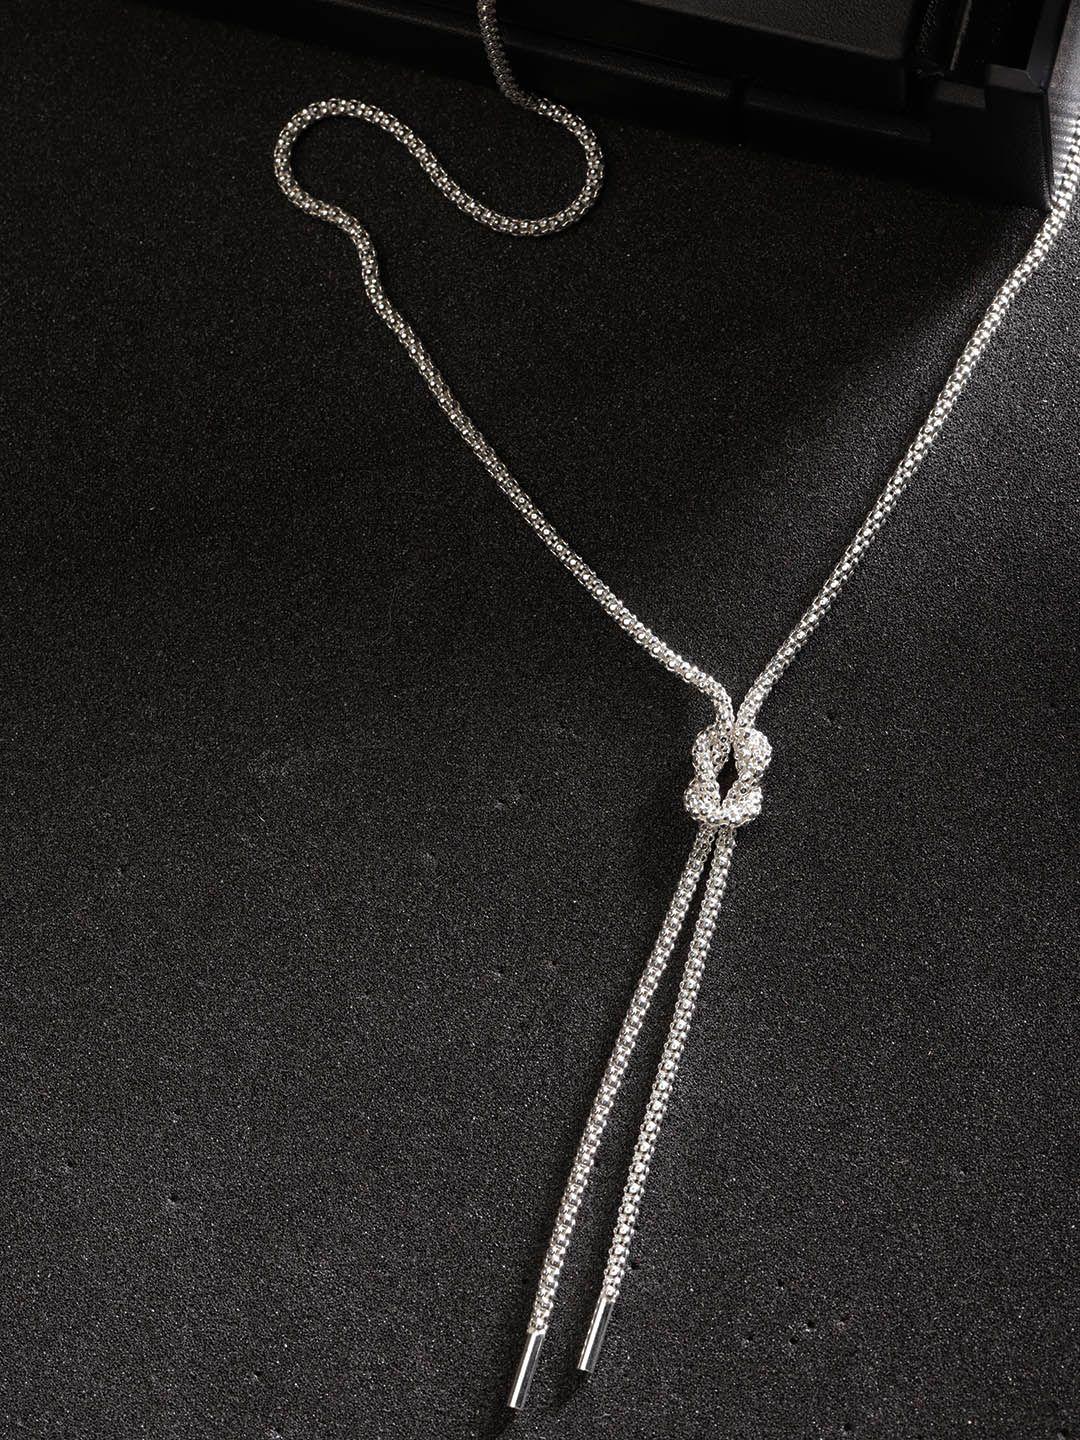 carlton-london--925-sterling-silver-necklace